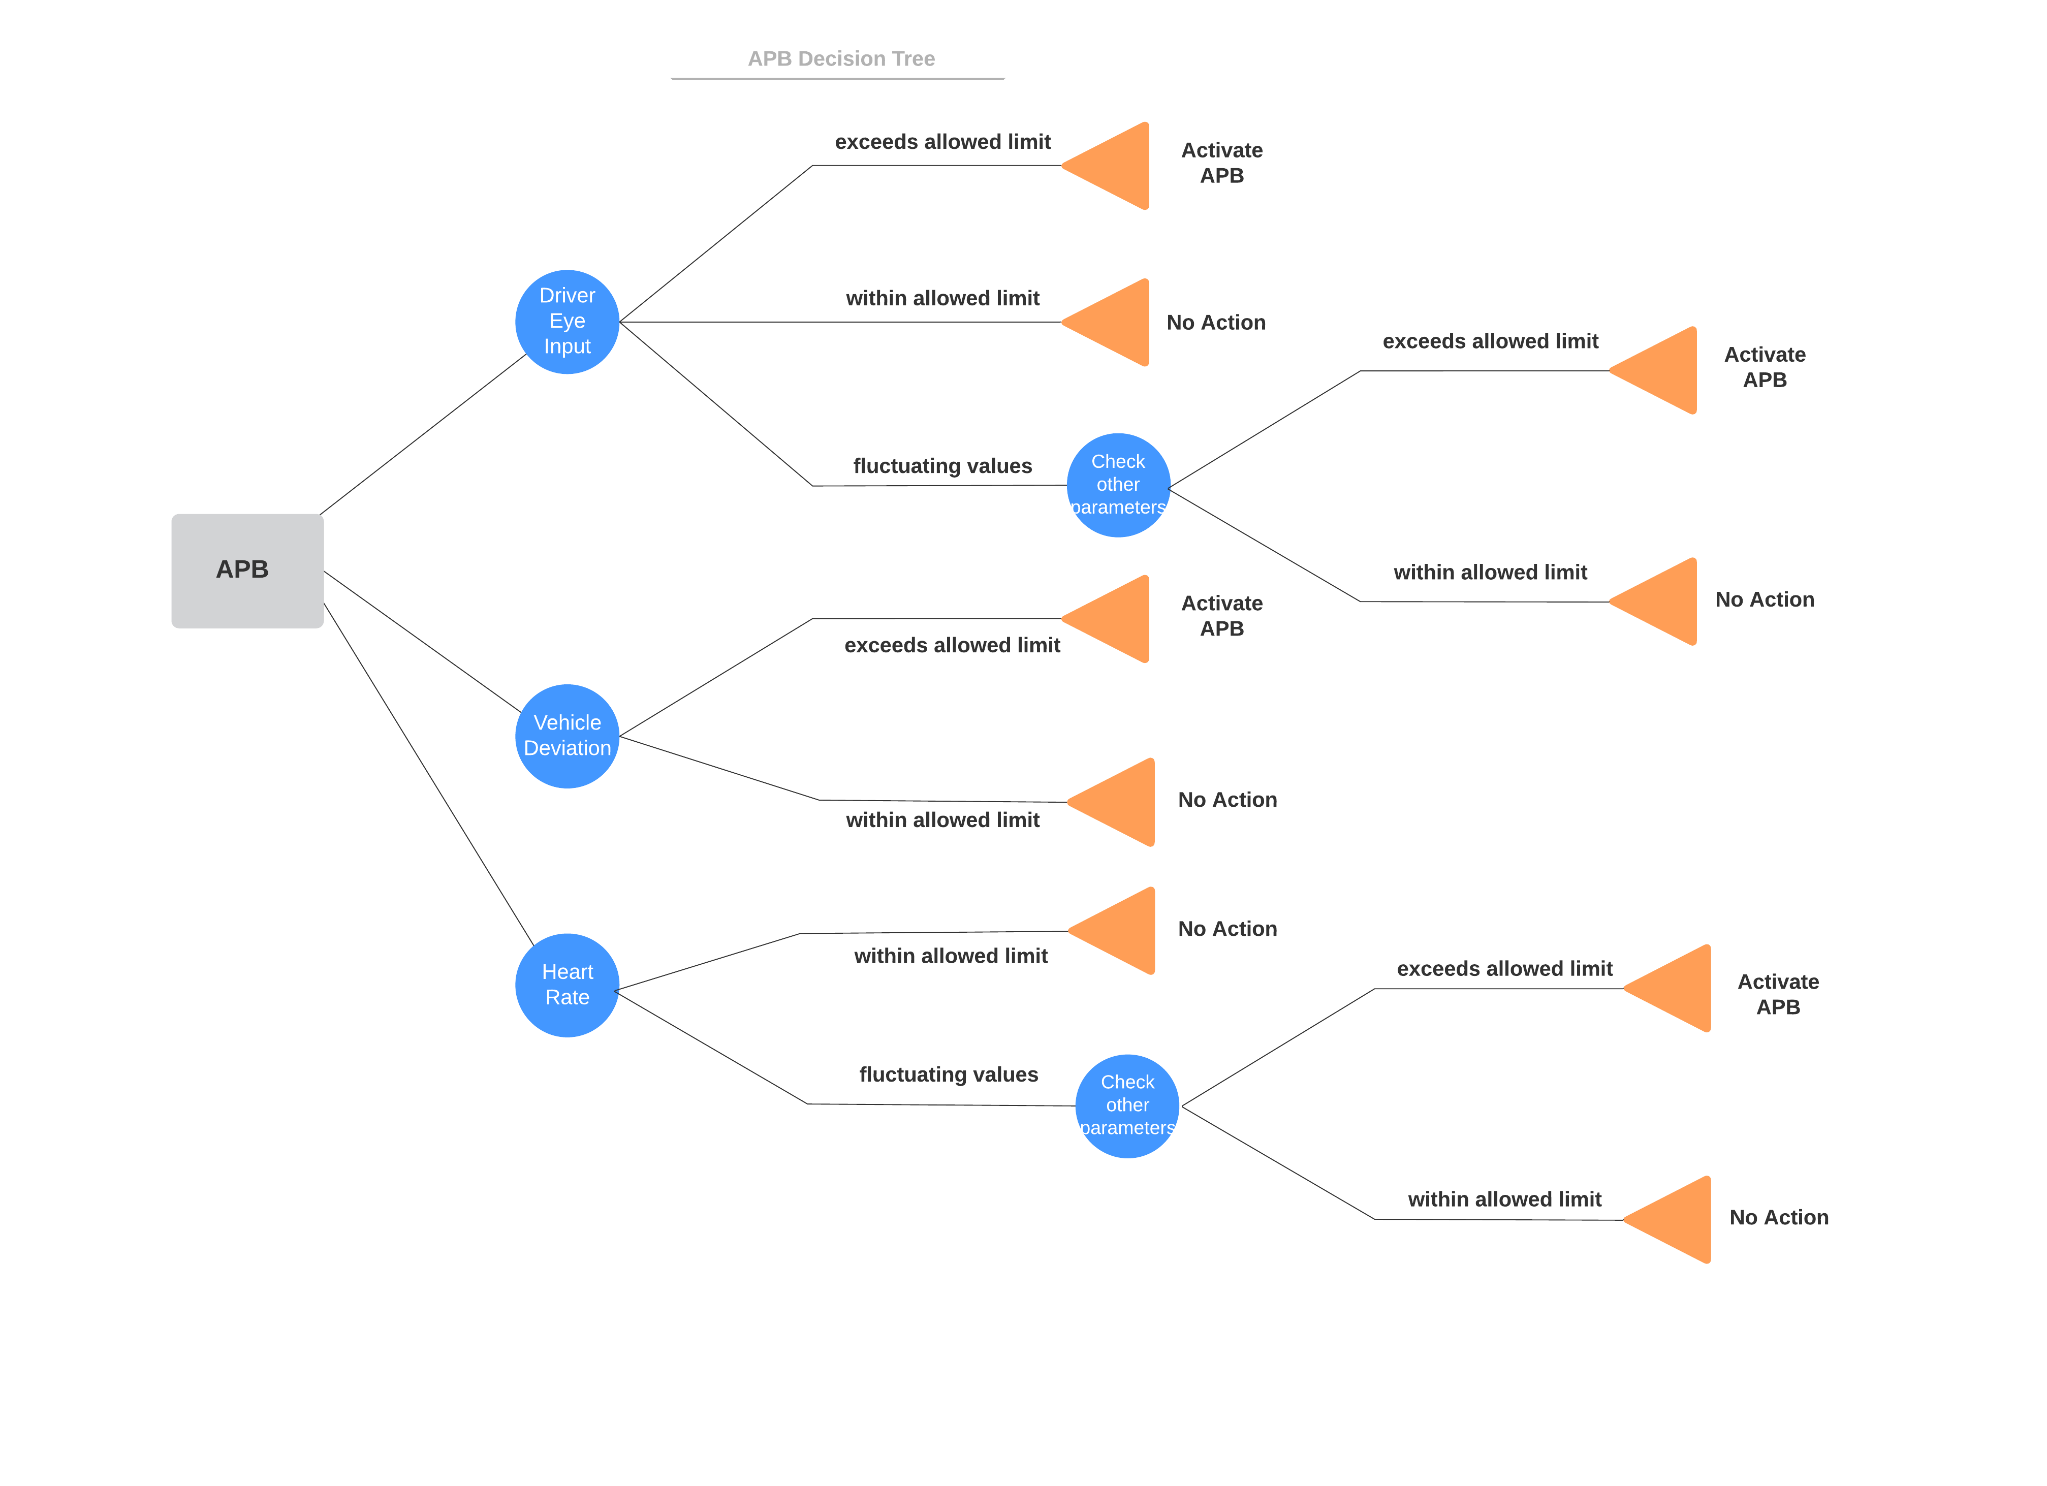 Basic decision tree of the APB 